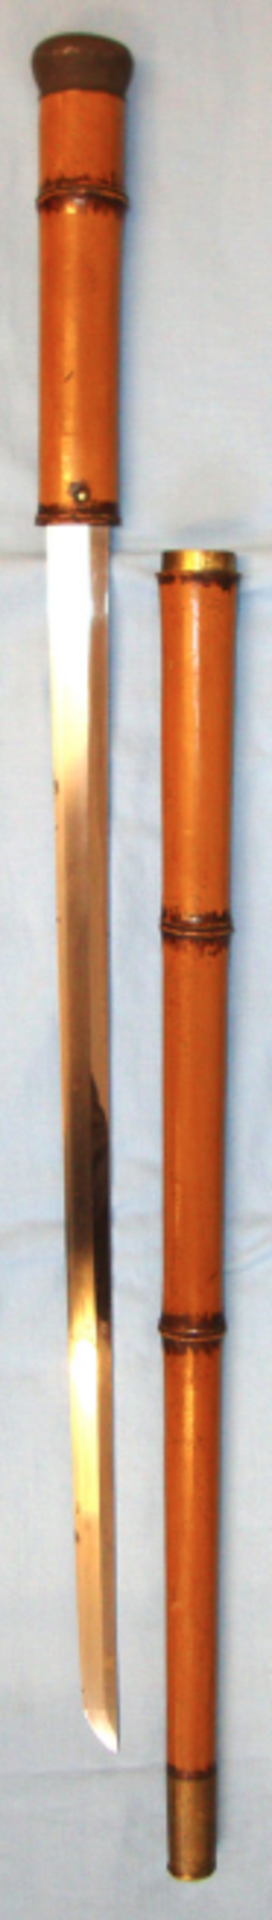 VERY RARE, C1870’s-1910 Japanese Officers Or Samurai Warrior’s Bamboo Form Mallaca Sword Stick